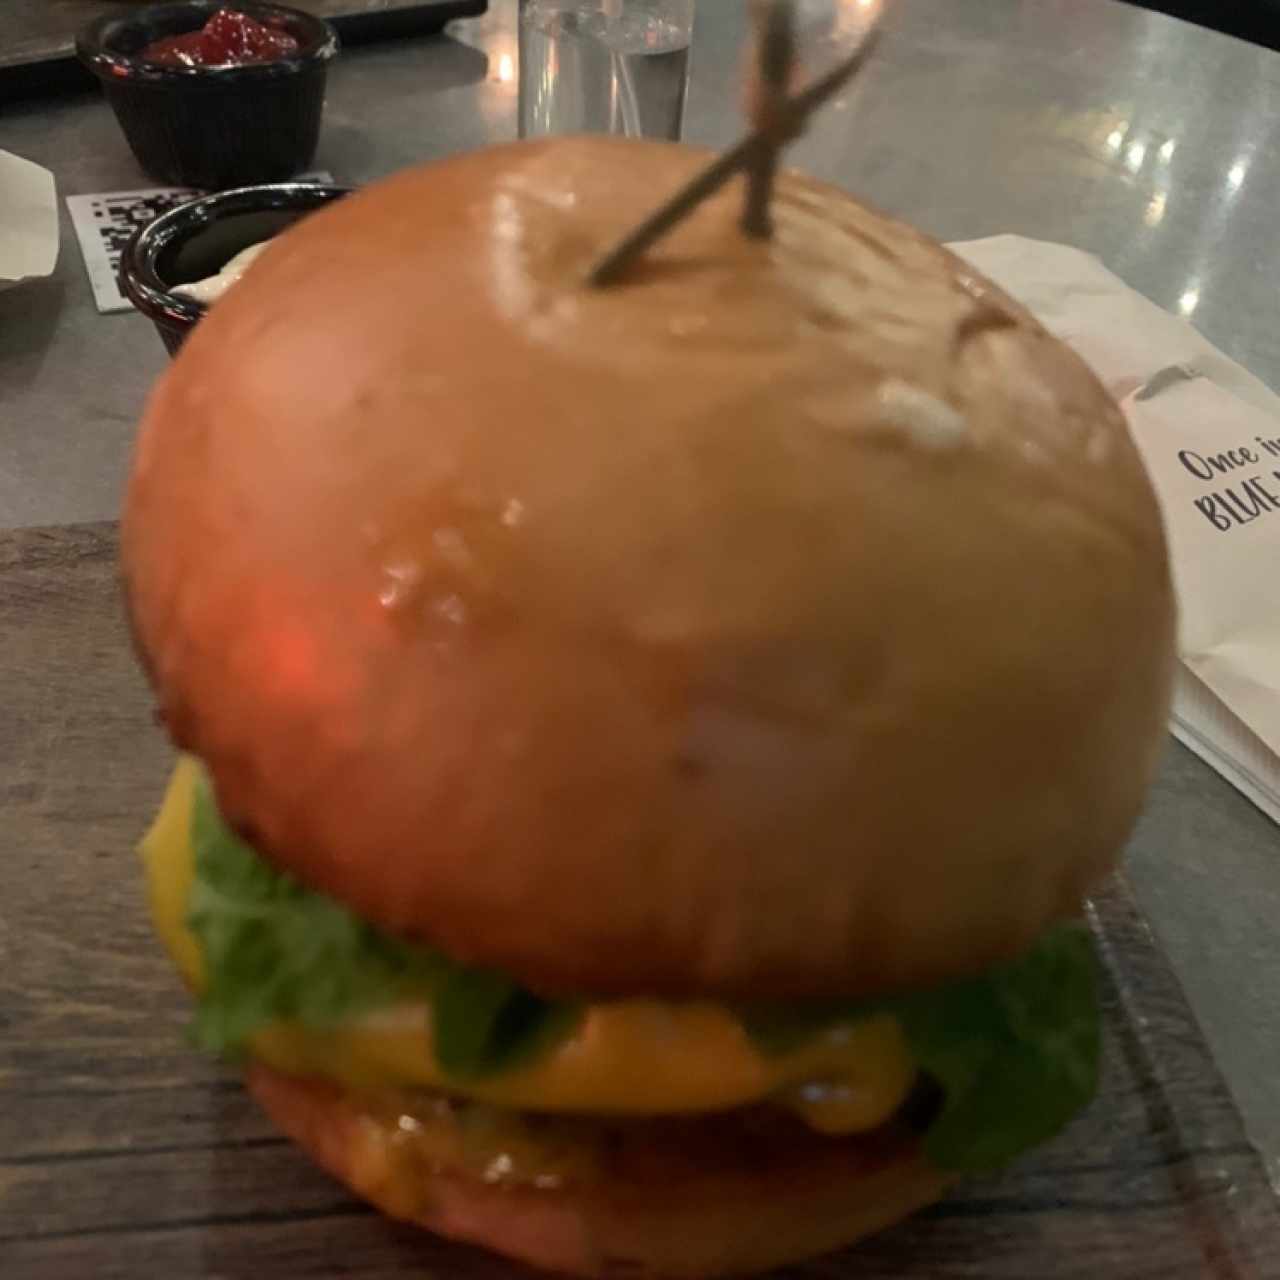 The American Burger